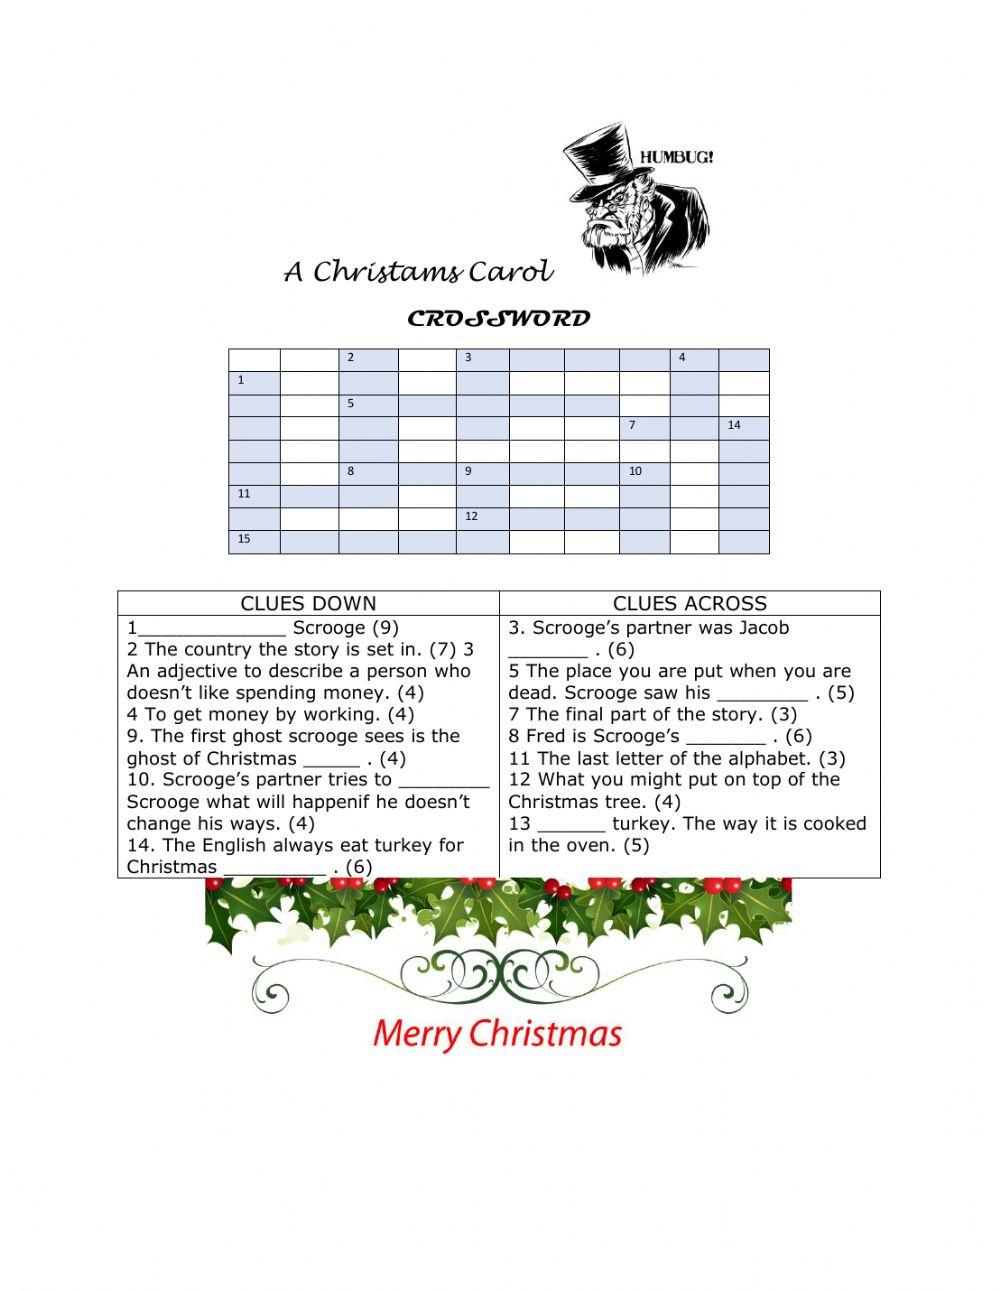 A Christmas Carol crossword